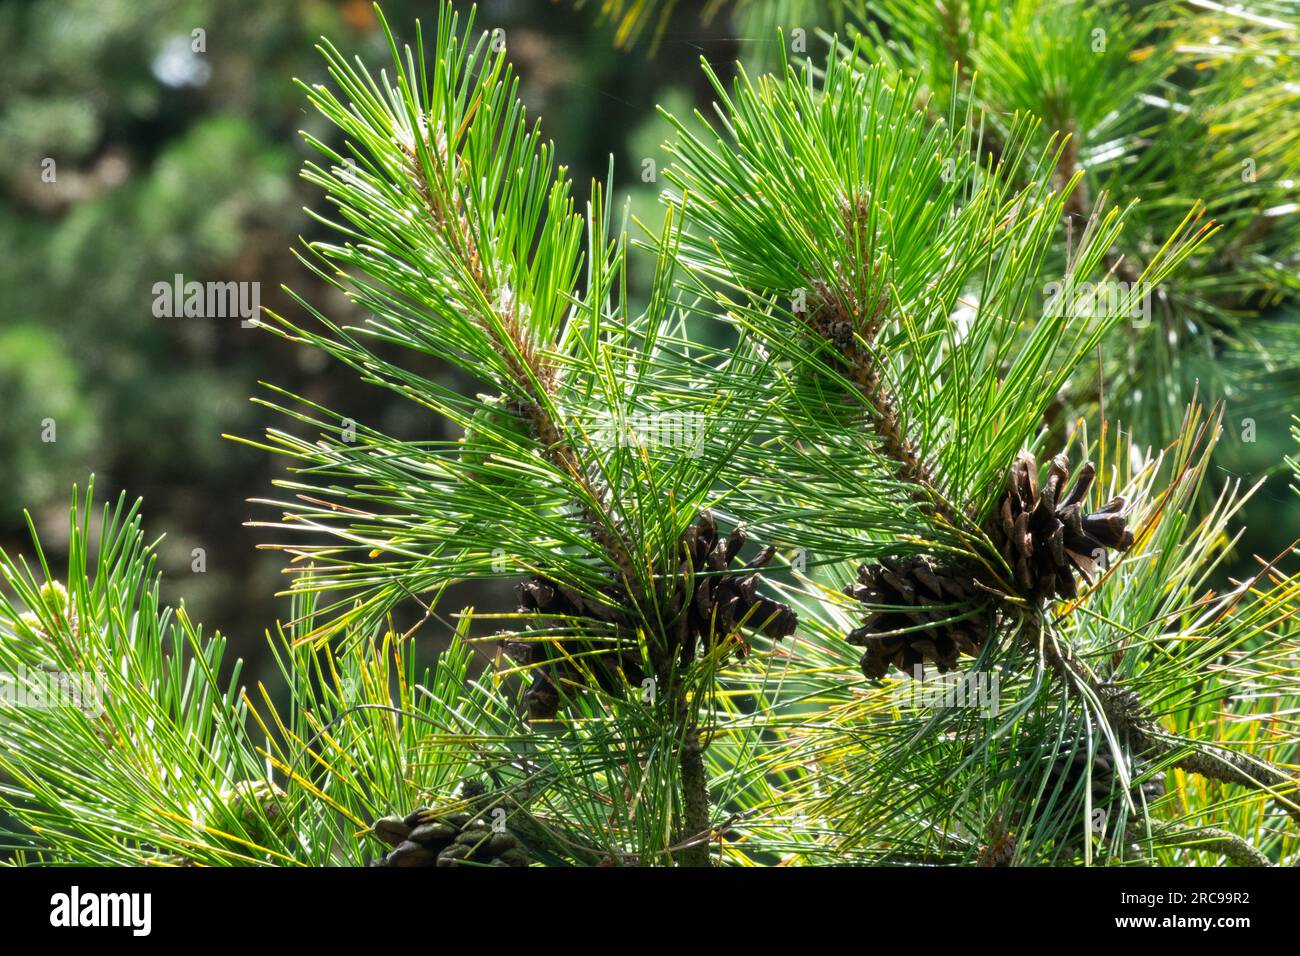 Chinese Pine, Pinus hwangshanensis, Huangshan Pine Stock Photo